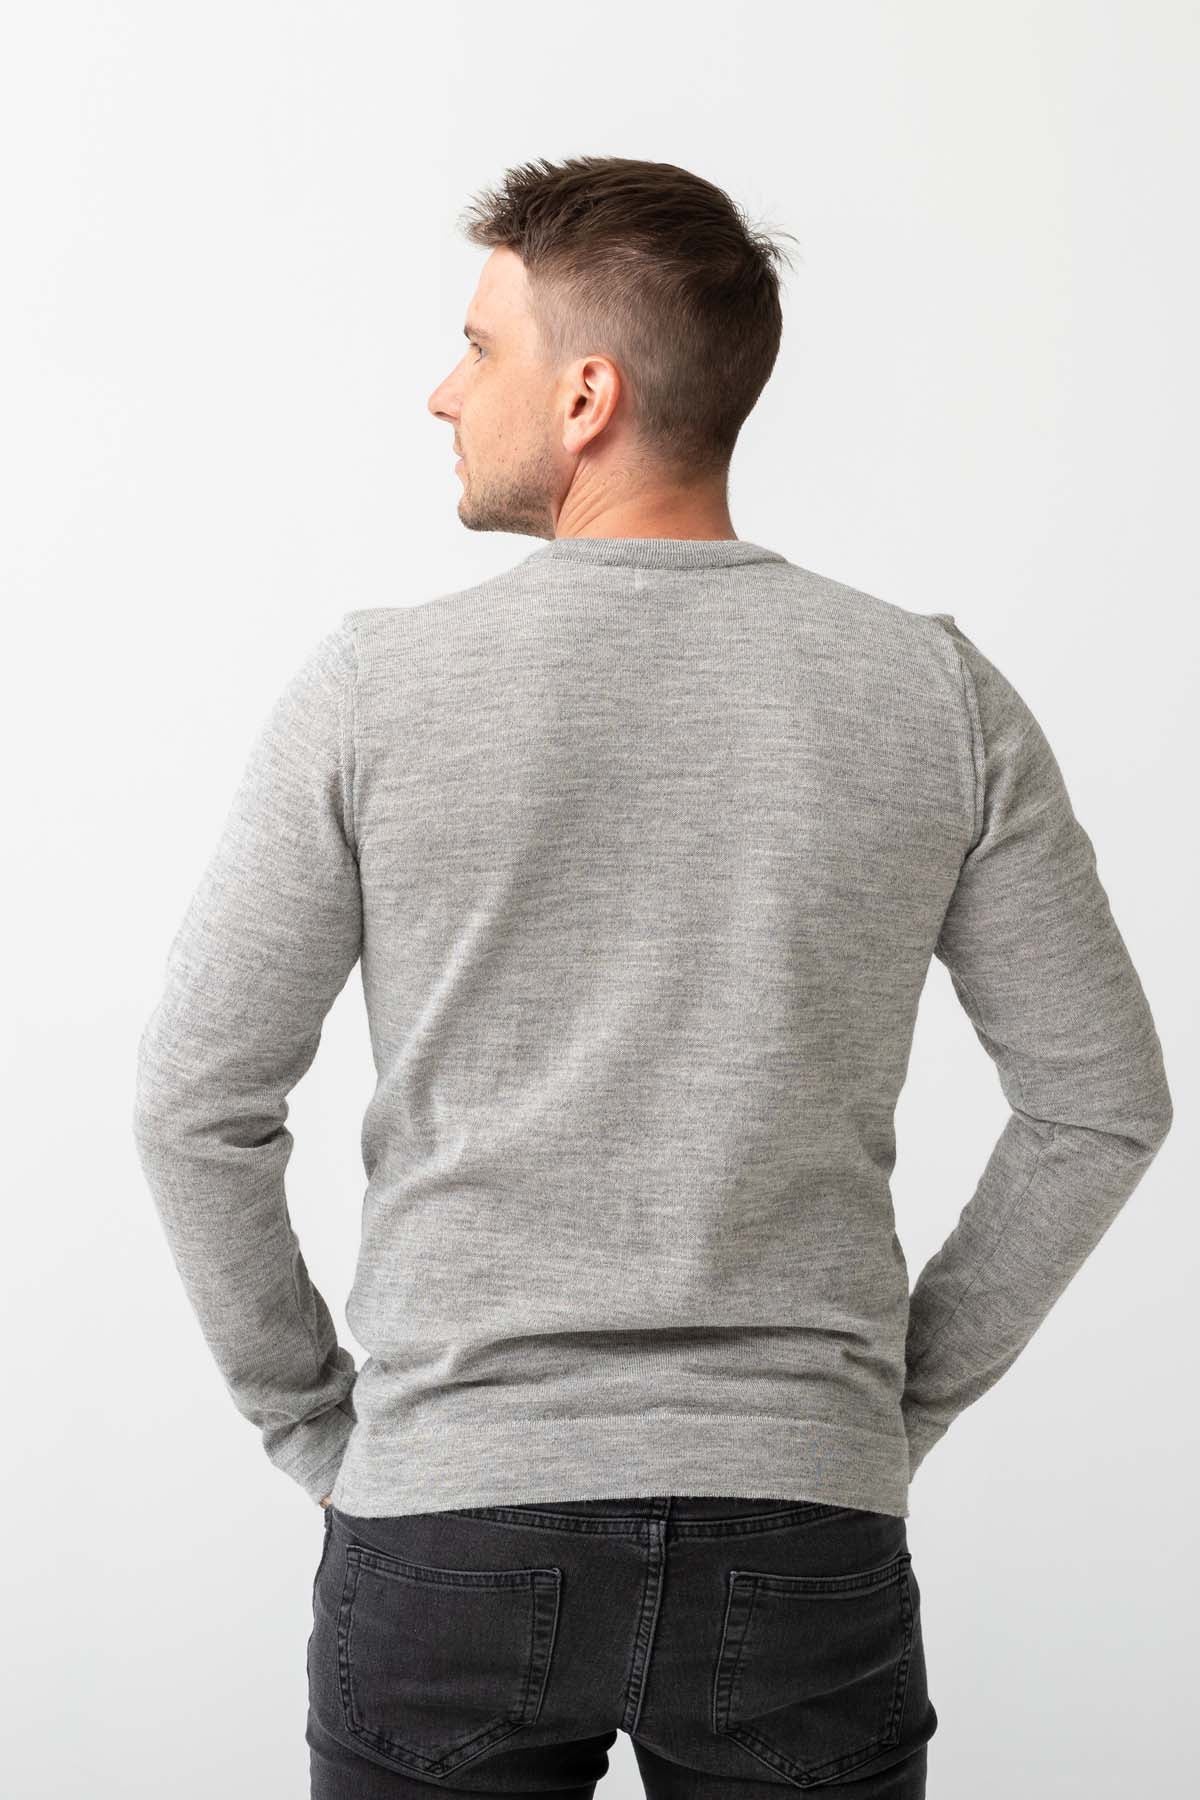 Paracas sweater - light gray